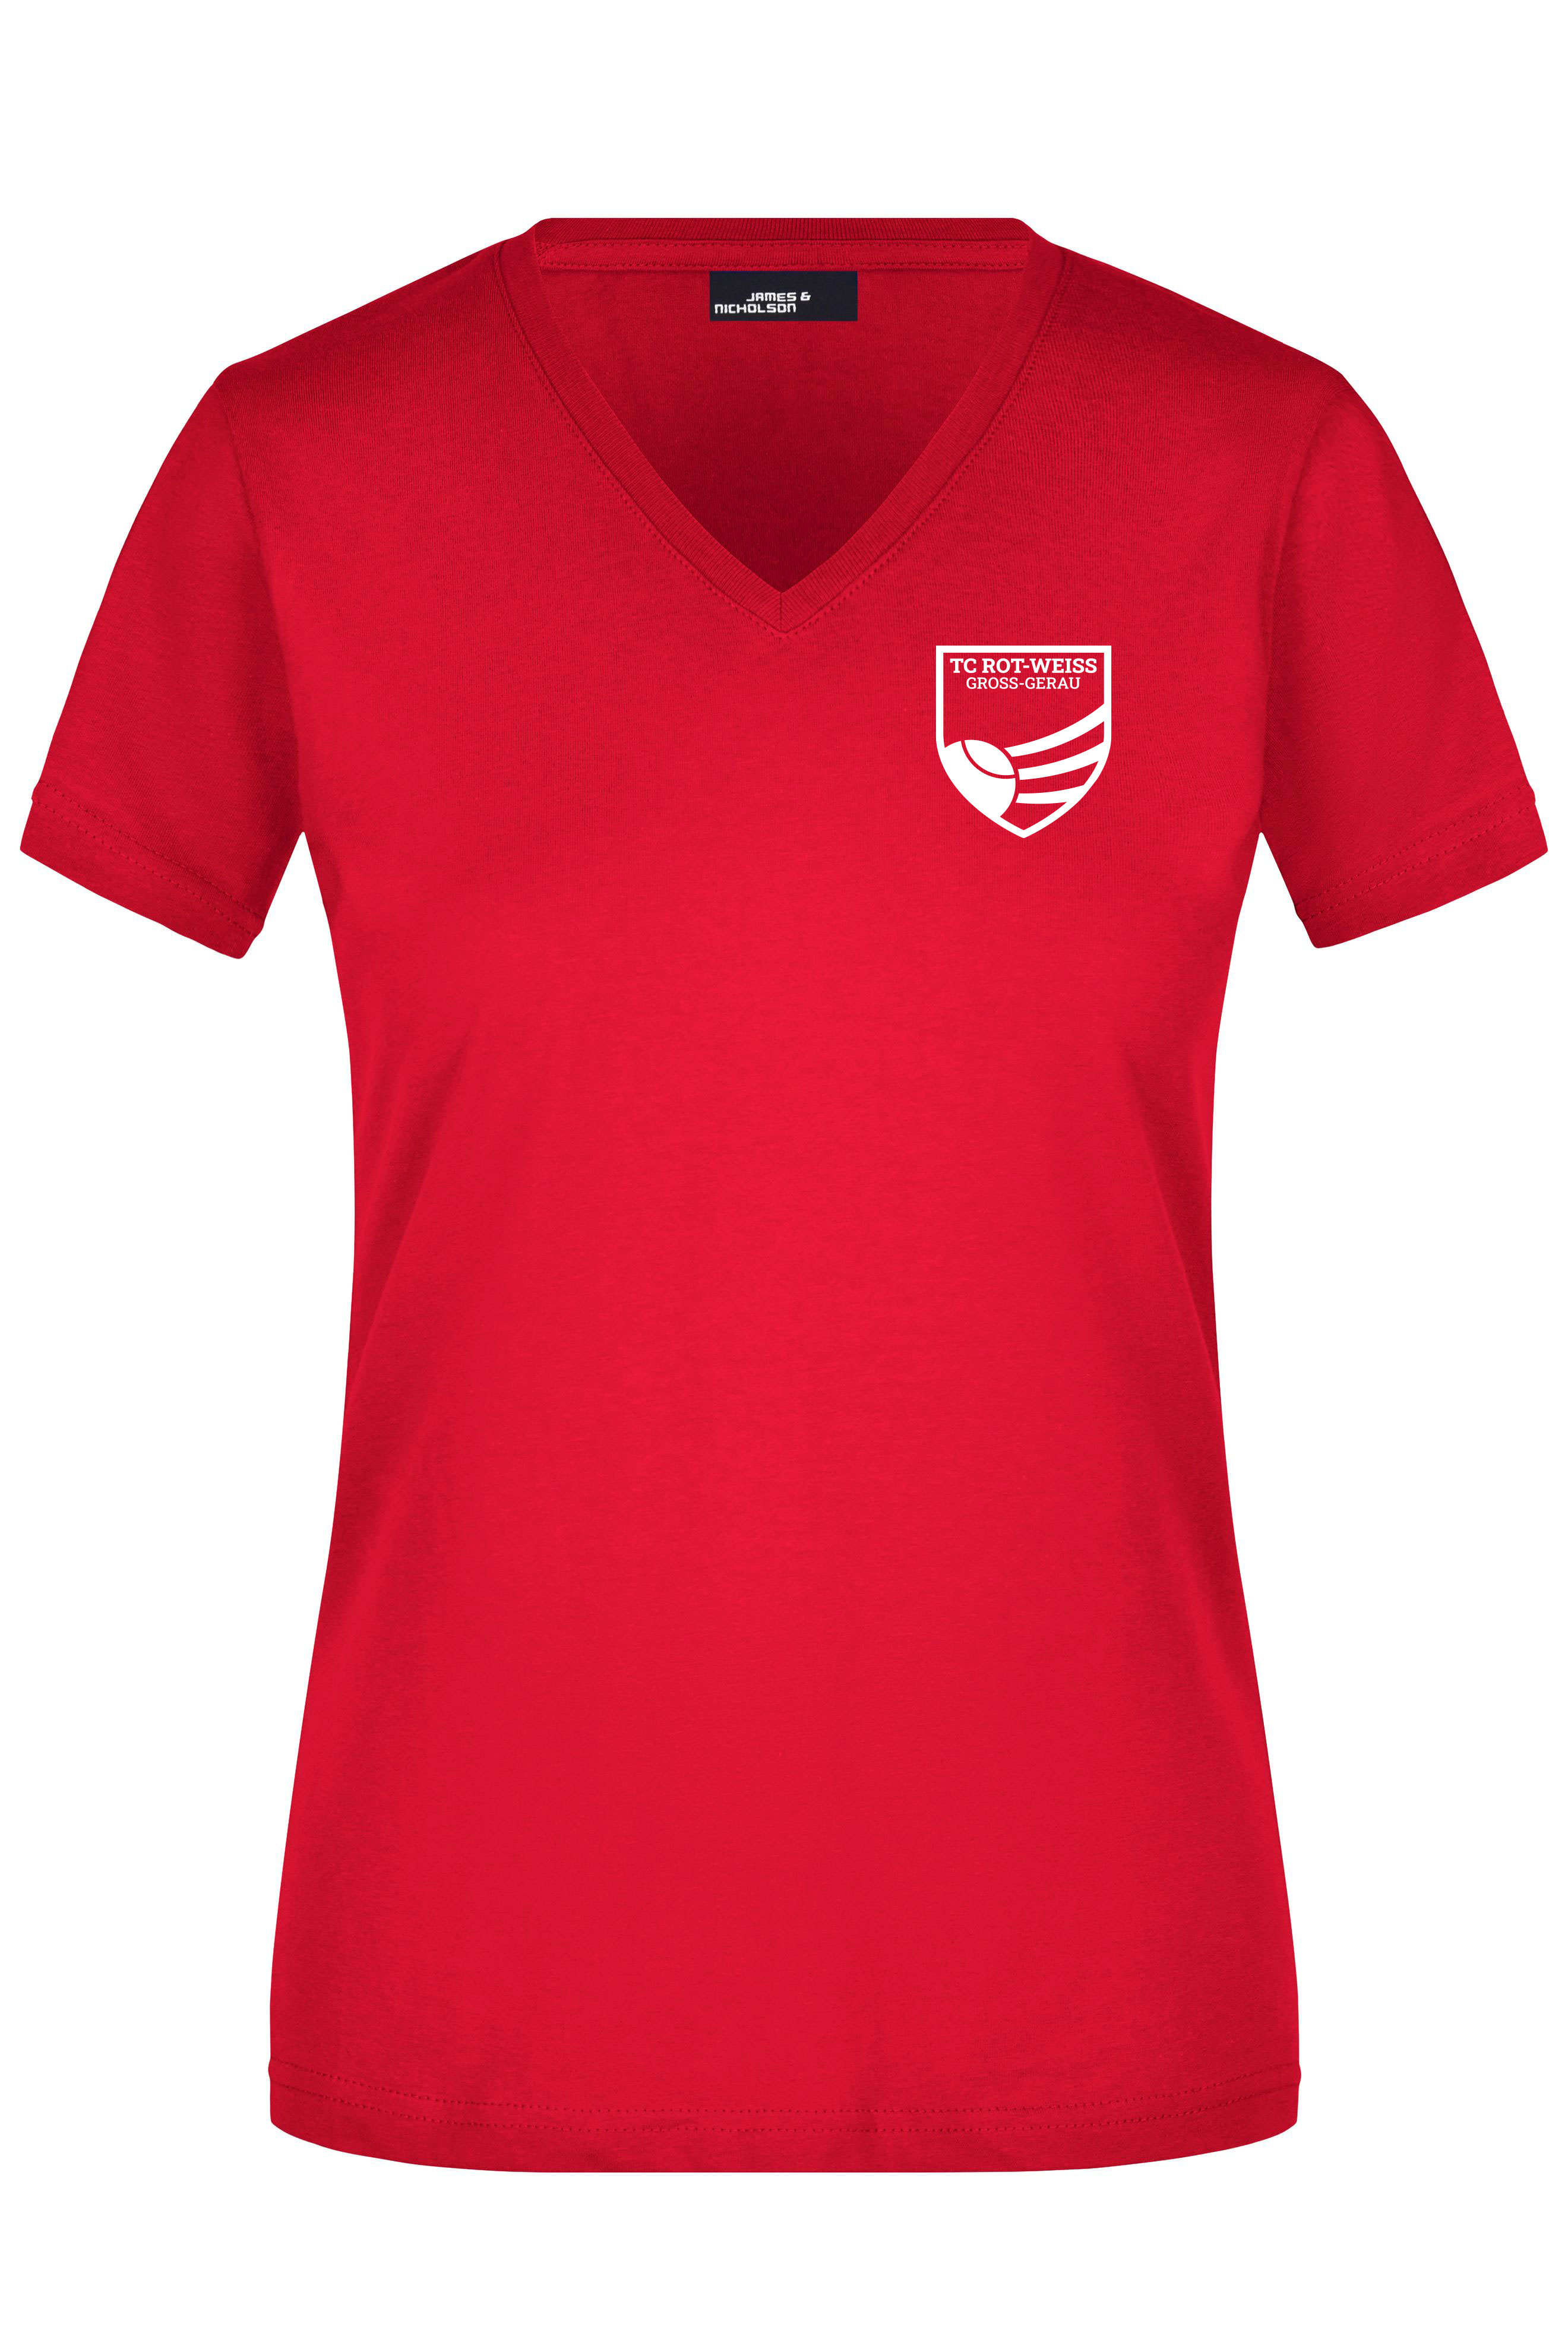 TC Rot-Weiss Girly T-Shirt weiss auf rot